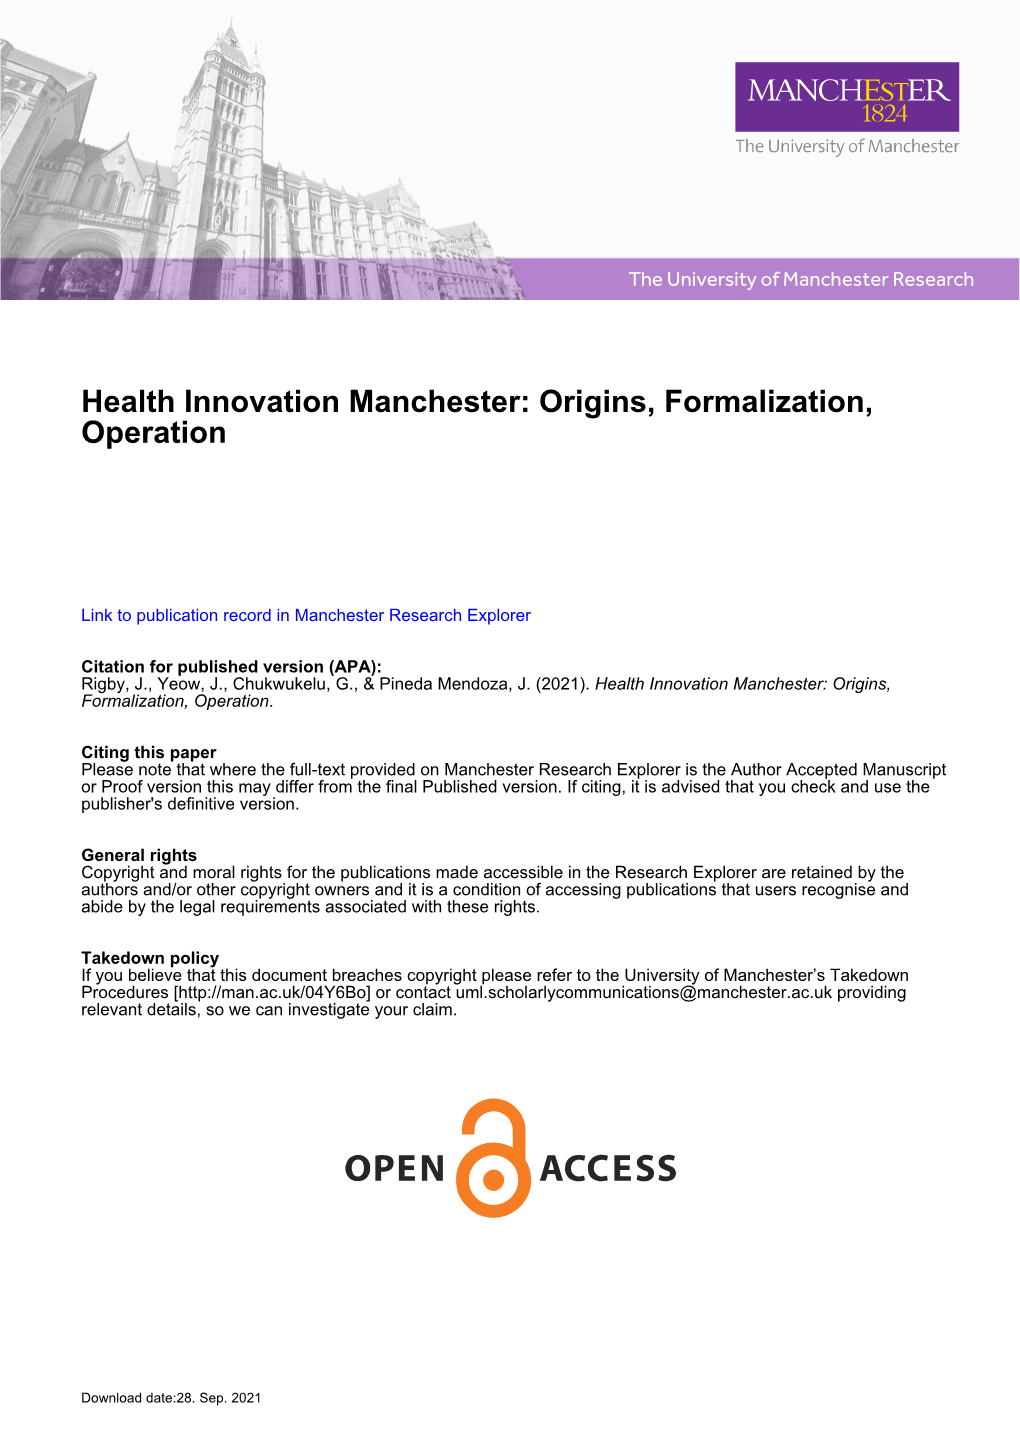 Health Innovation Manchester: Origins, Formalization, Operation